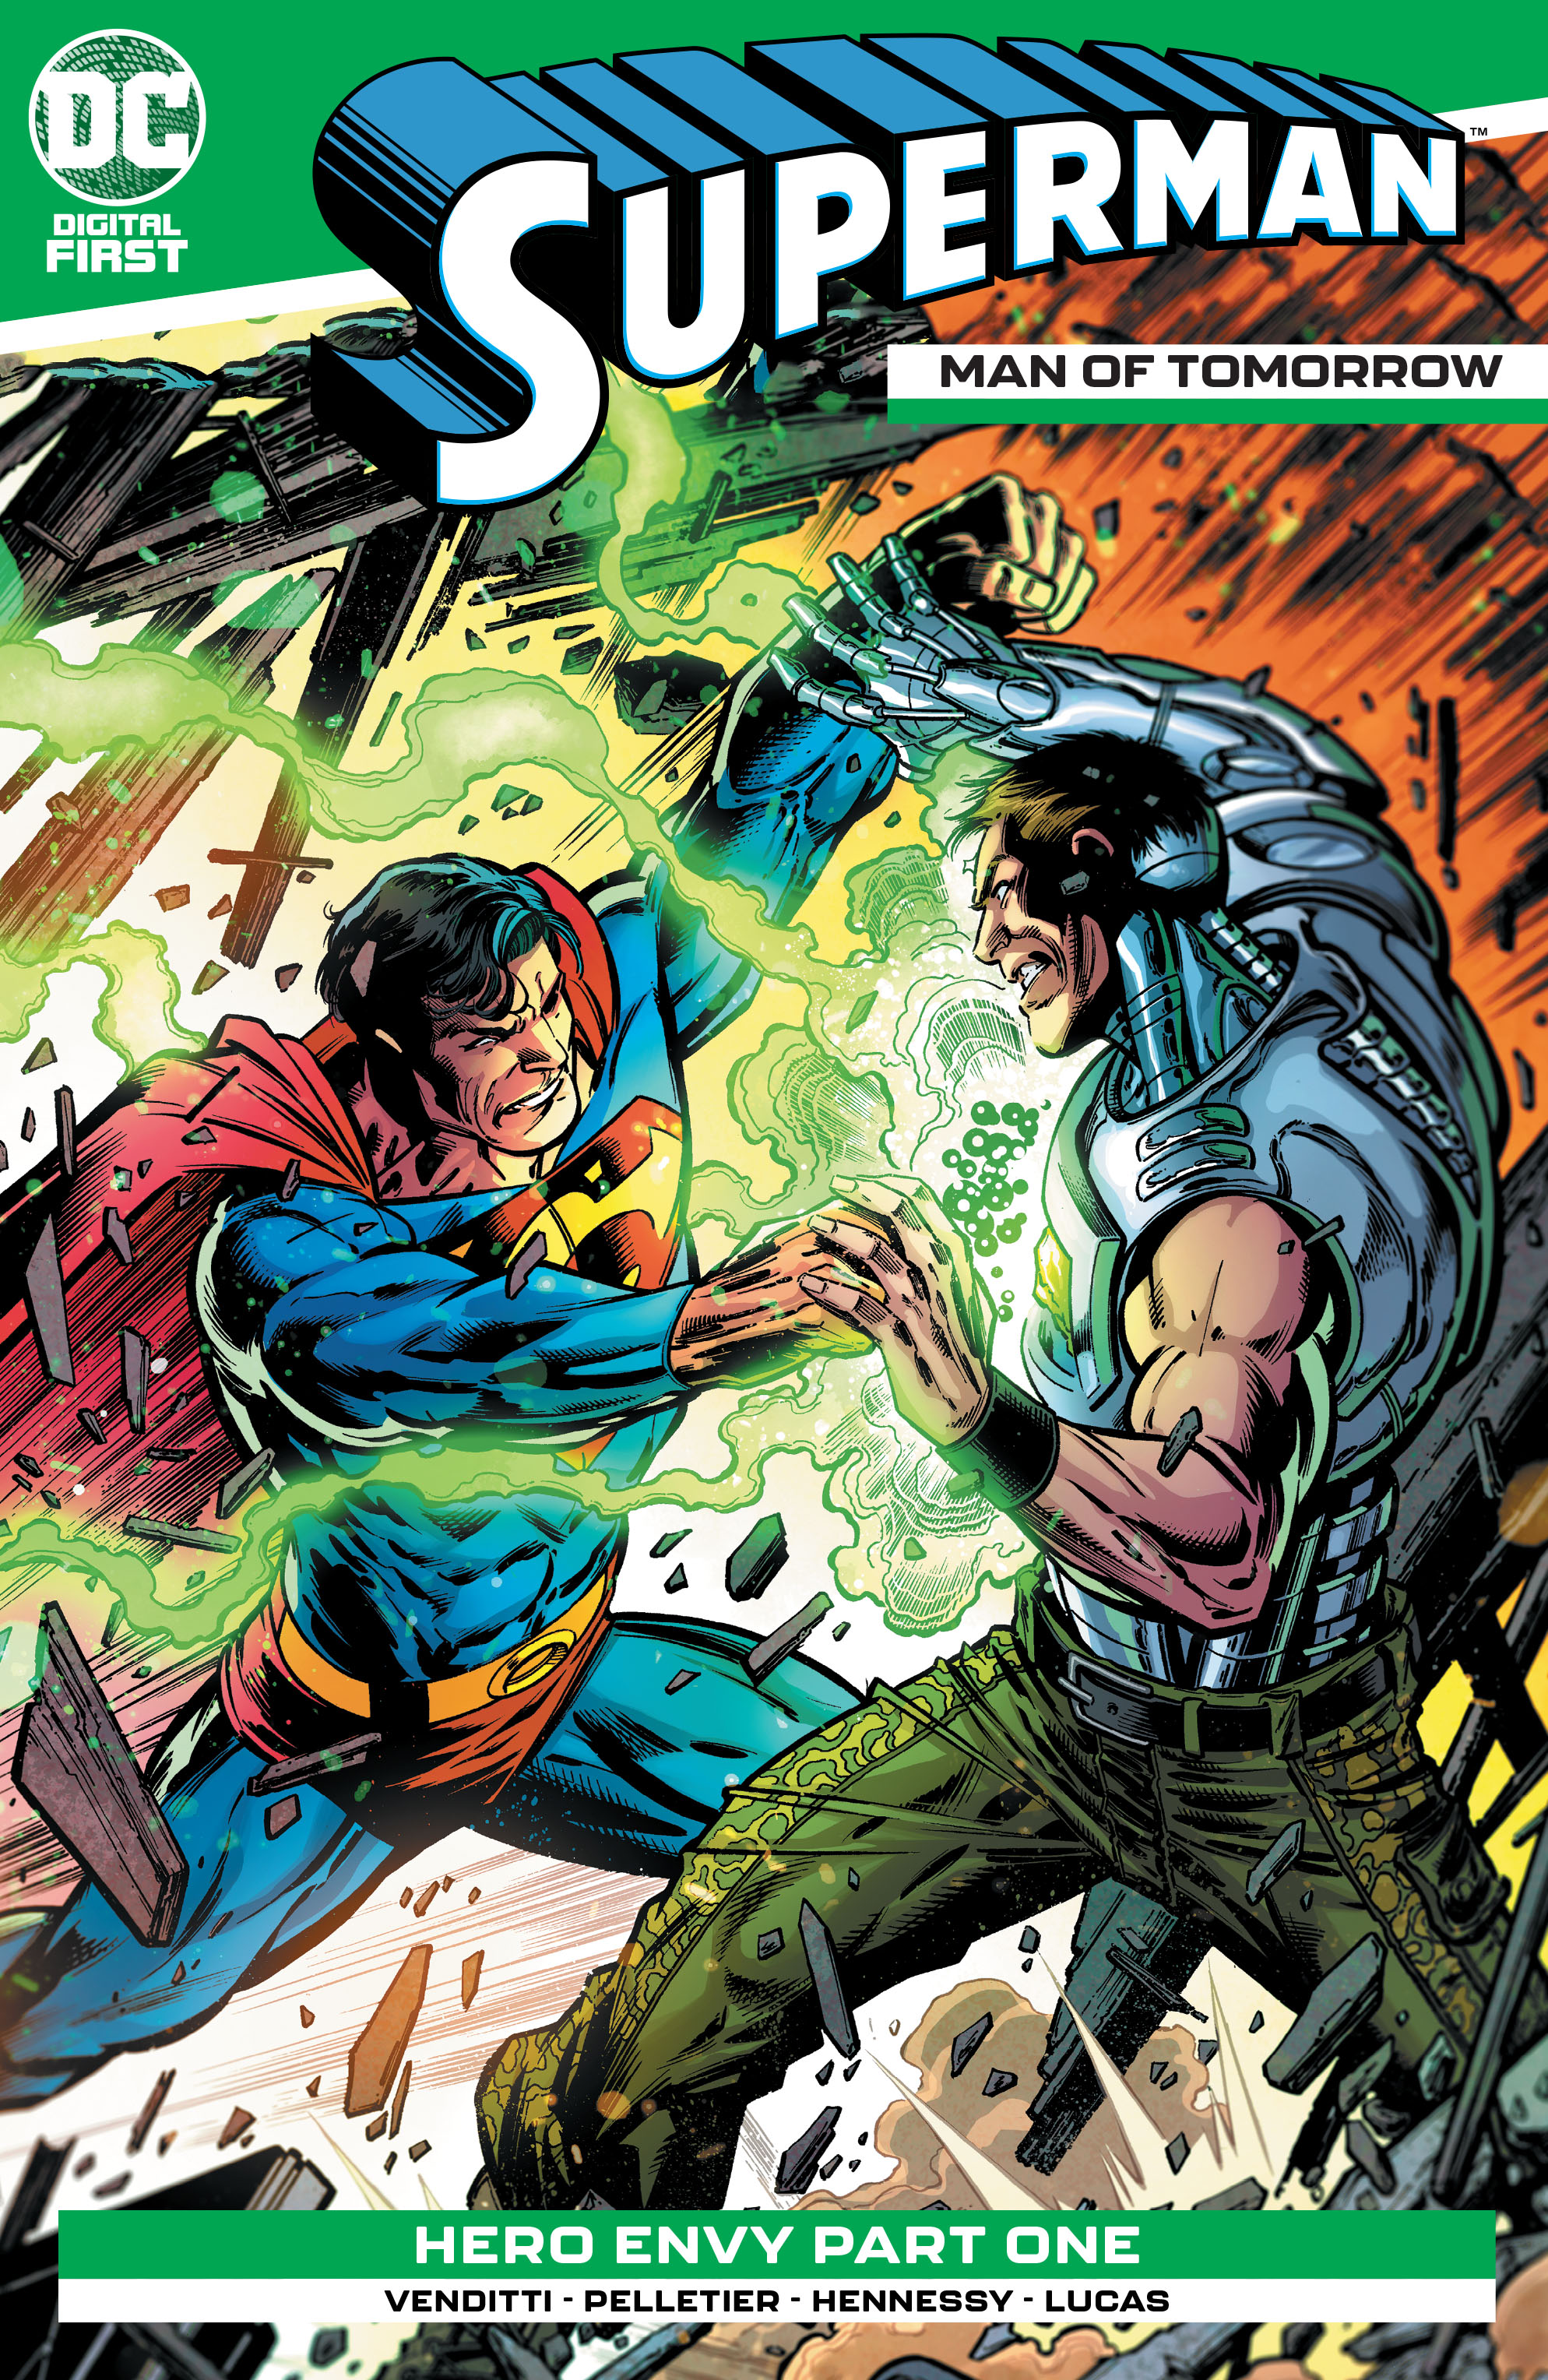 Superman: Man of Tomorrow #14 Review - The Aspiring Kryptonian